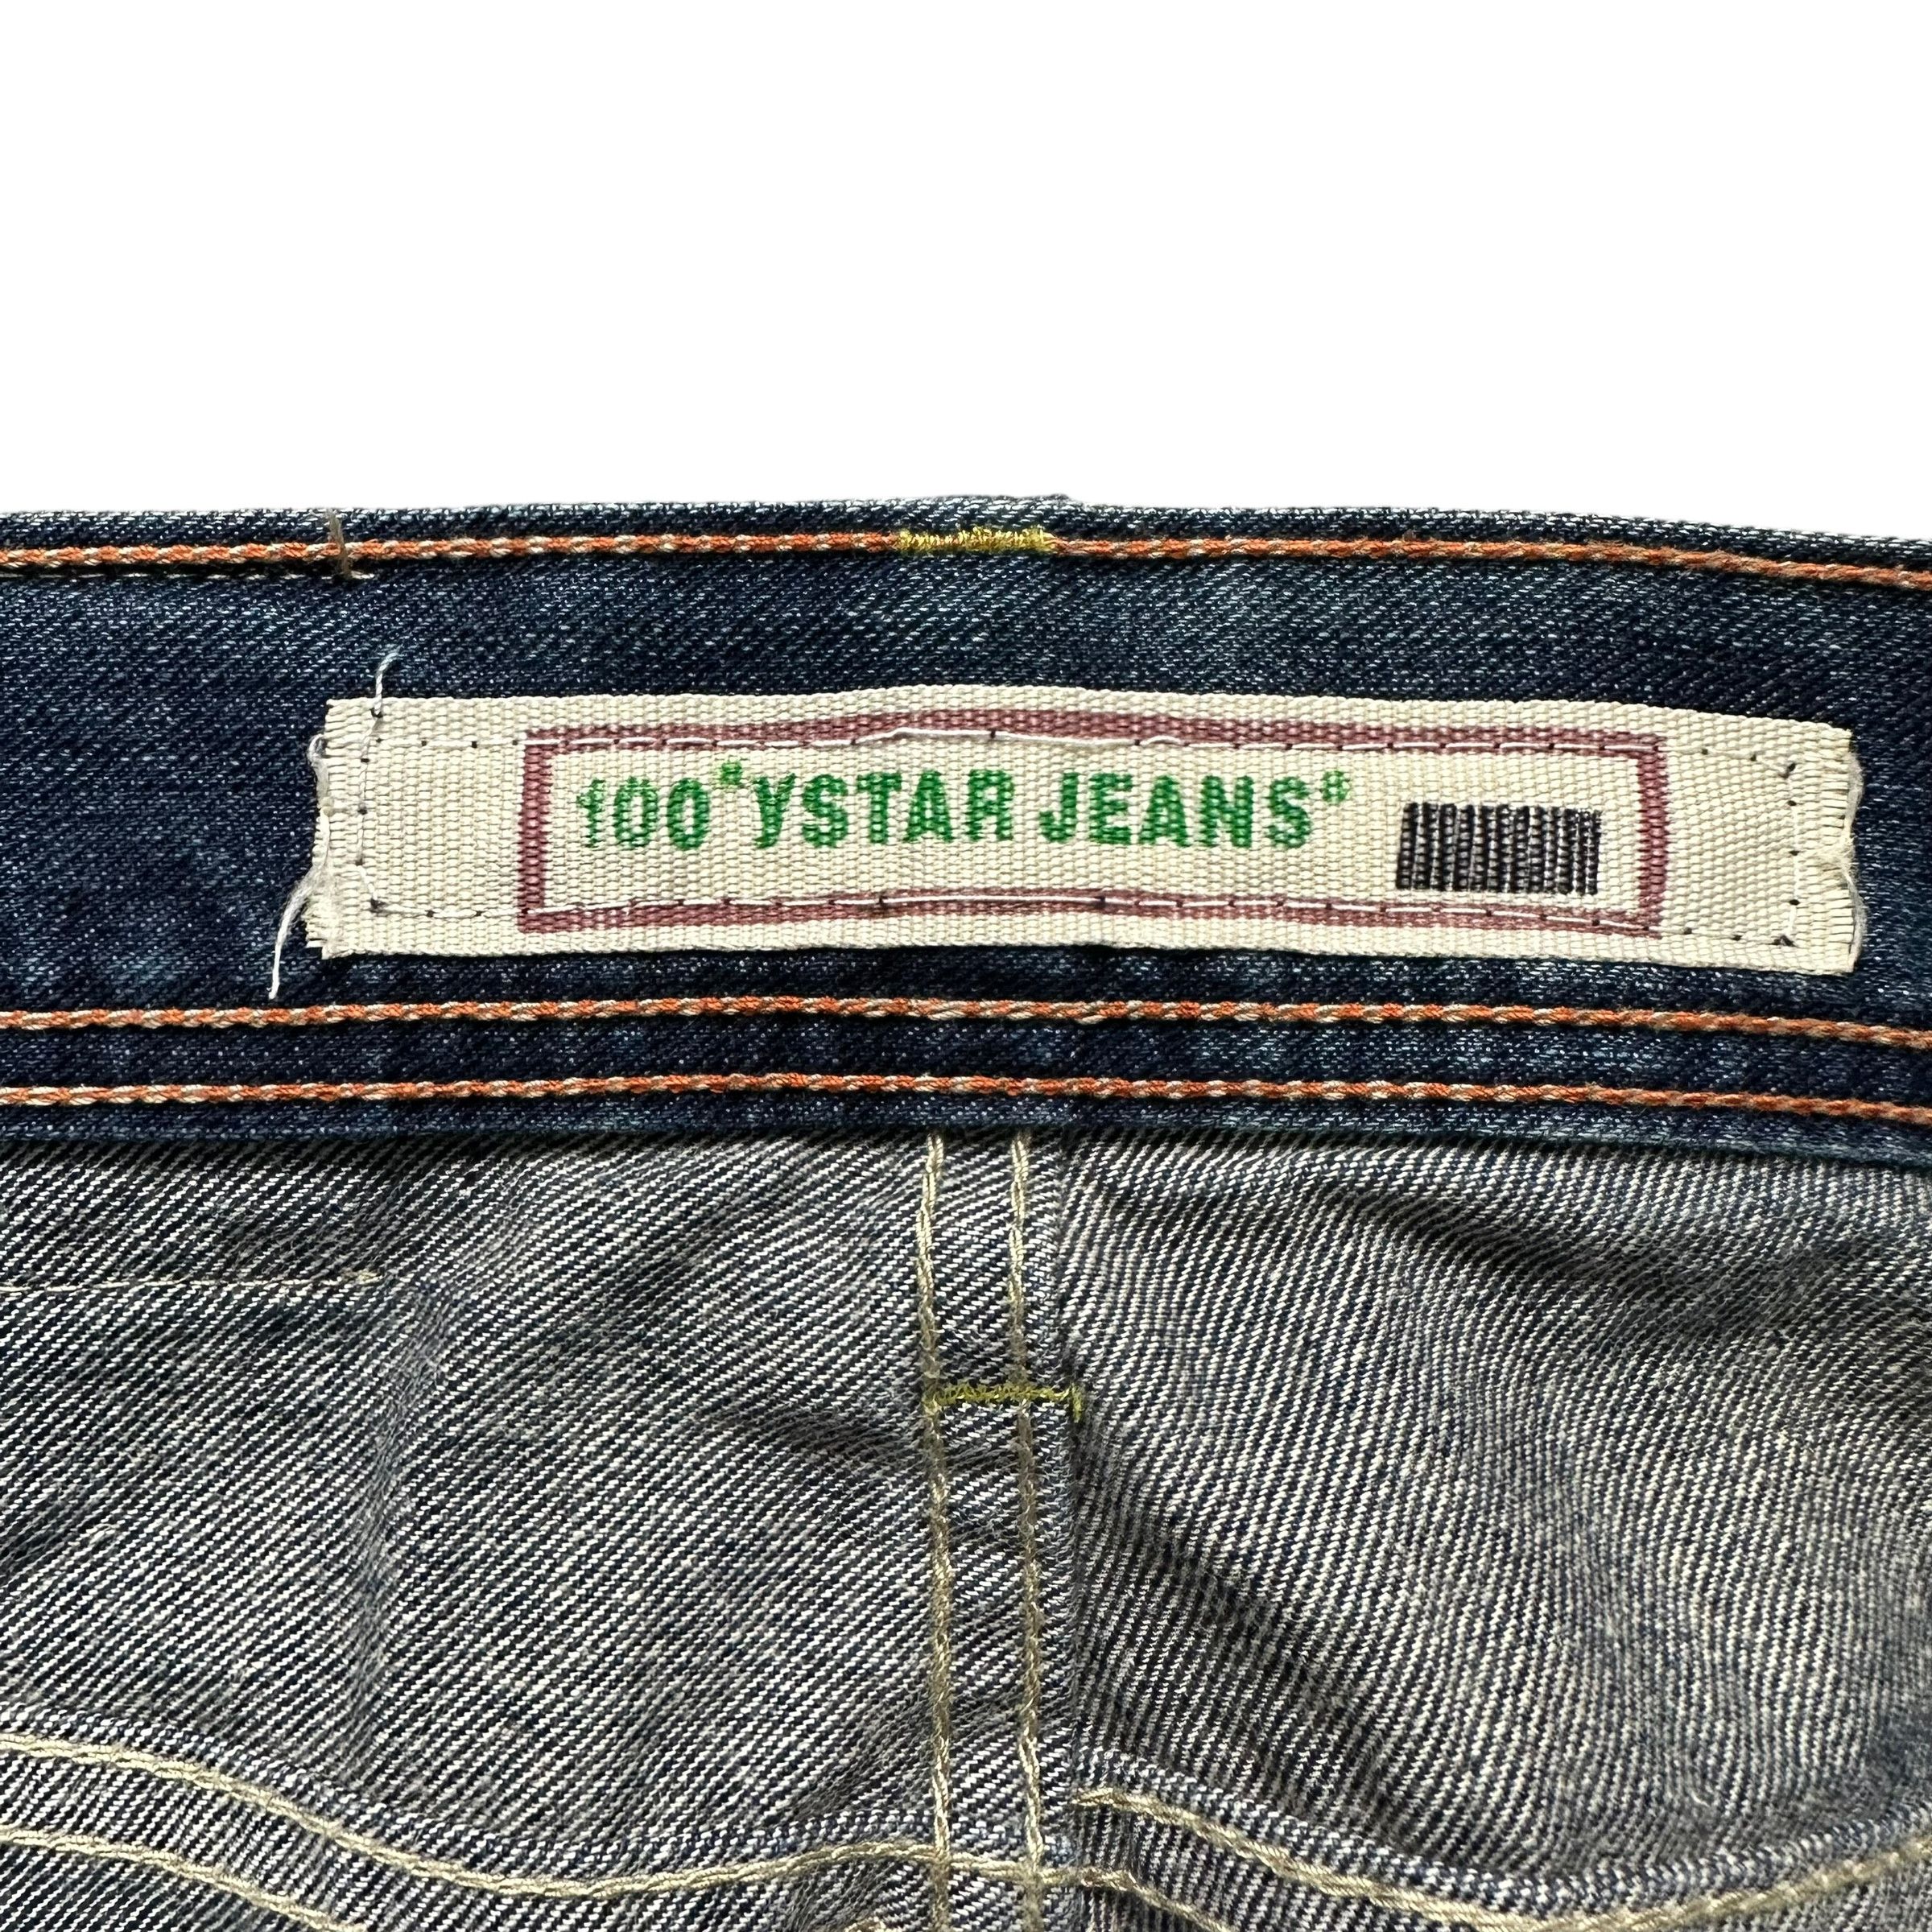 Dsquared2 100 yStar Jeans Bamt Jeanfashion Denim #9109-57 - 9